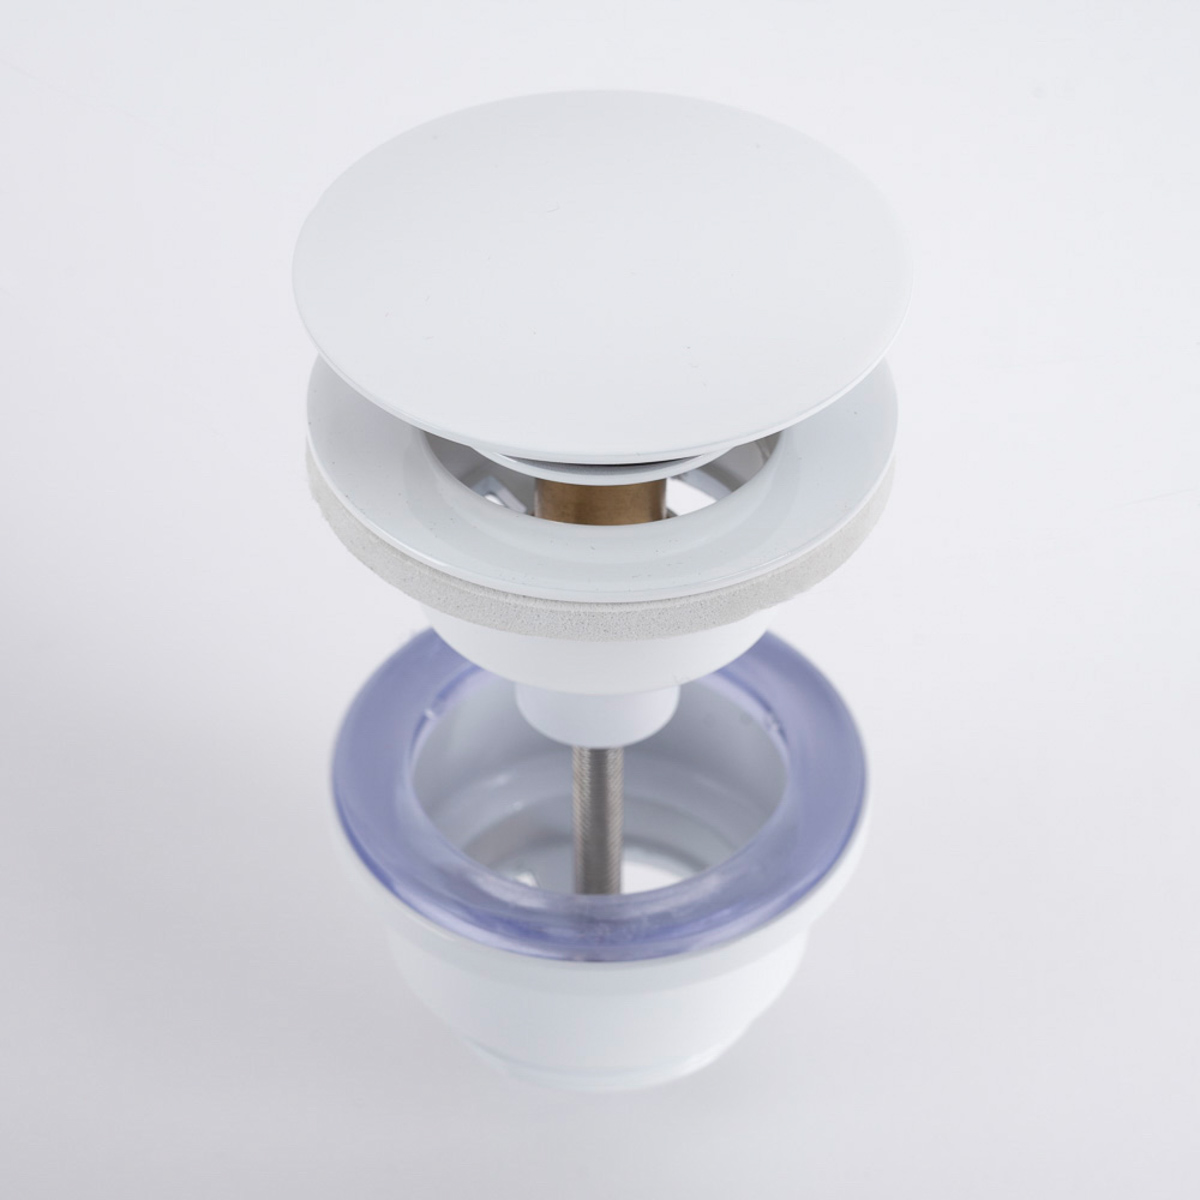 Válvula Clic-Clac Tapón Central para Lavabo Baño con Rebosadero